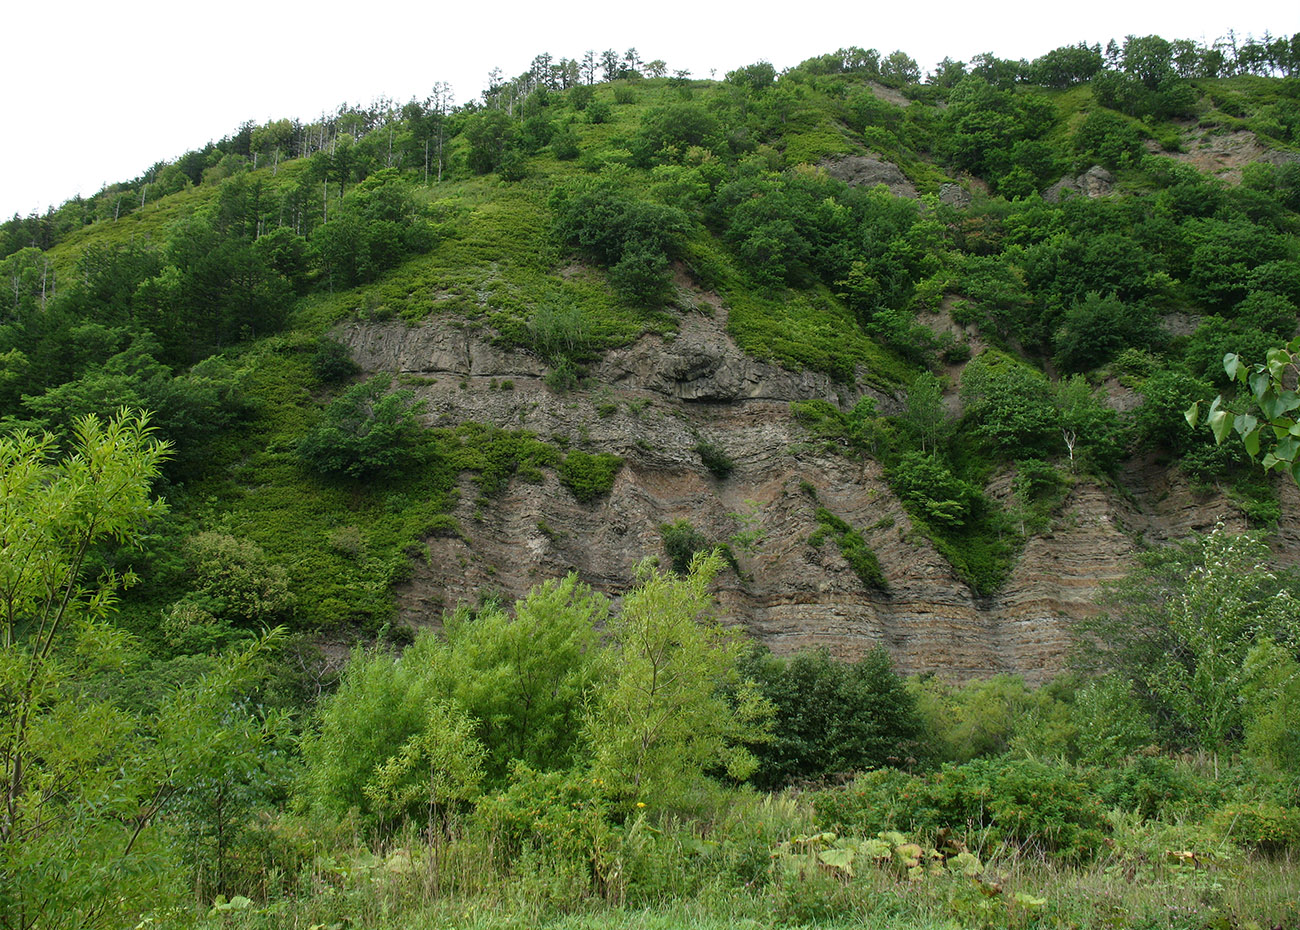 Томари, image of landscape/habitat.